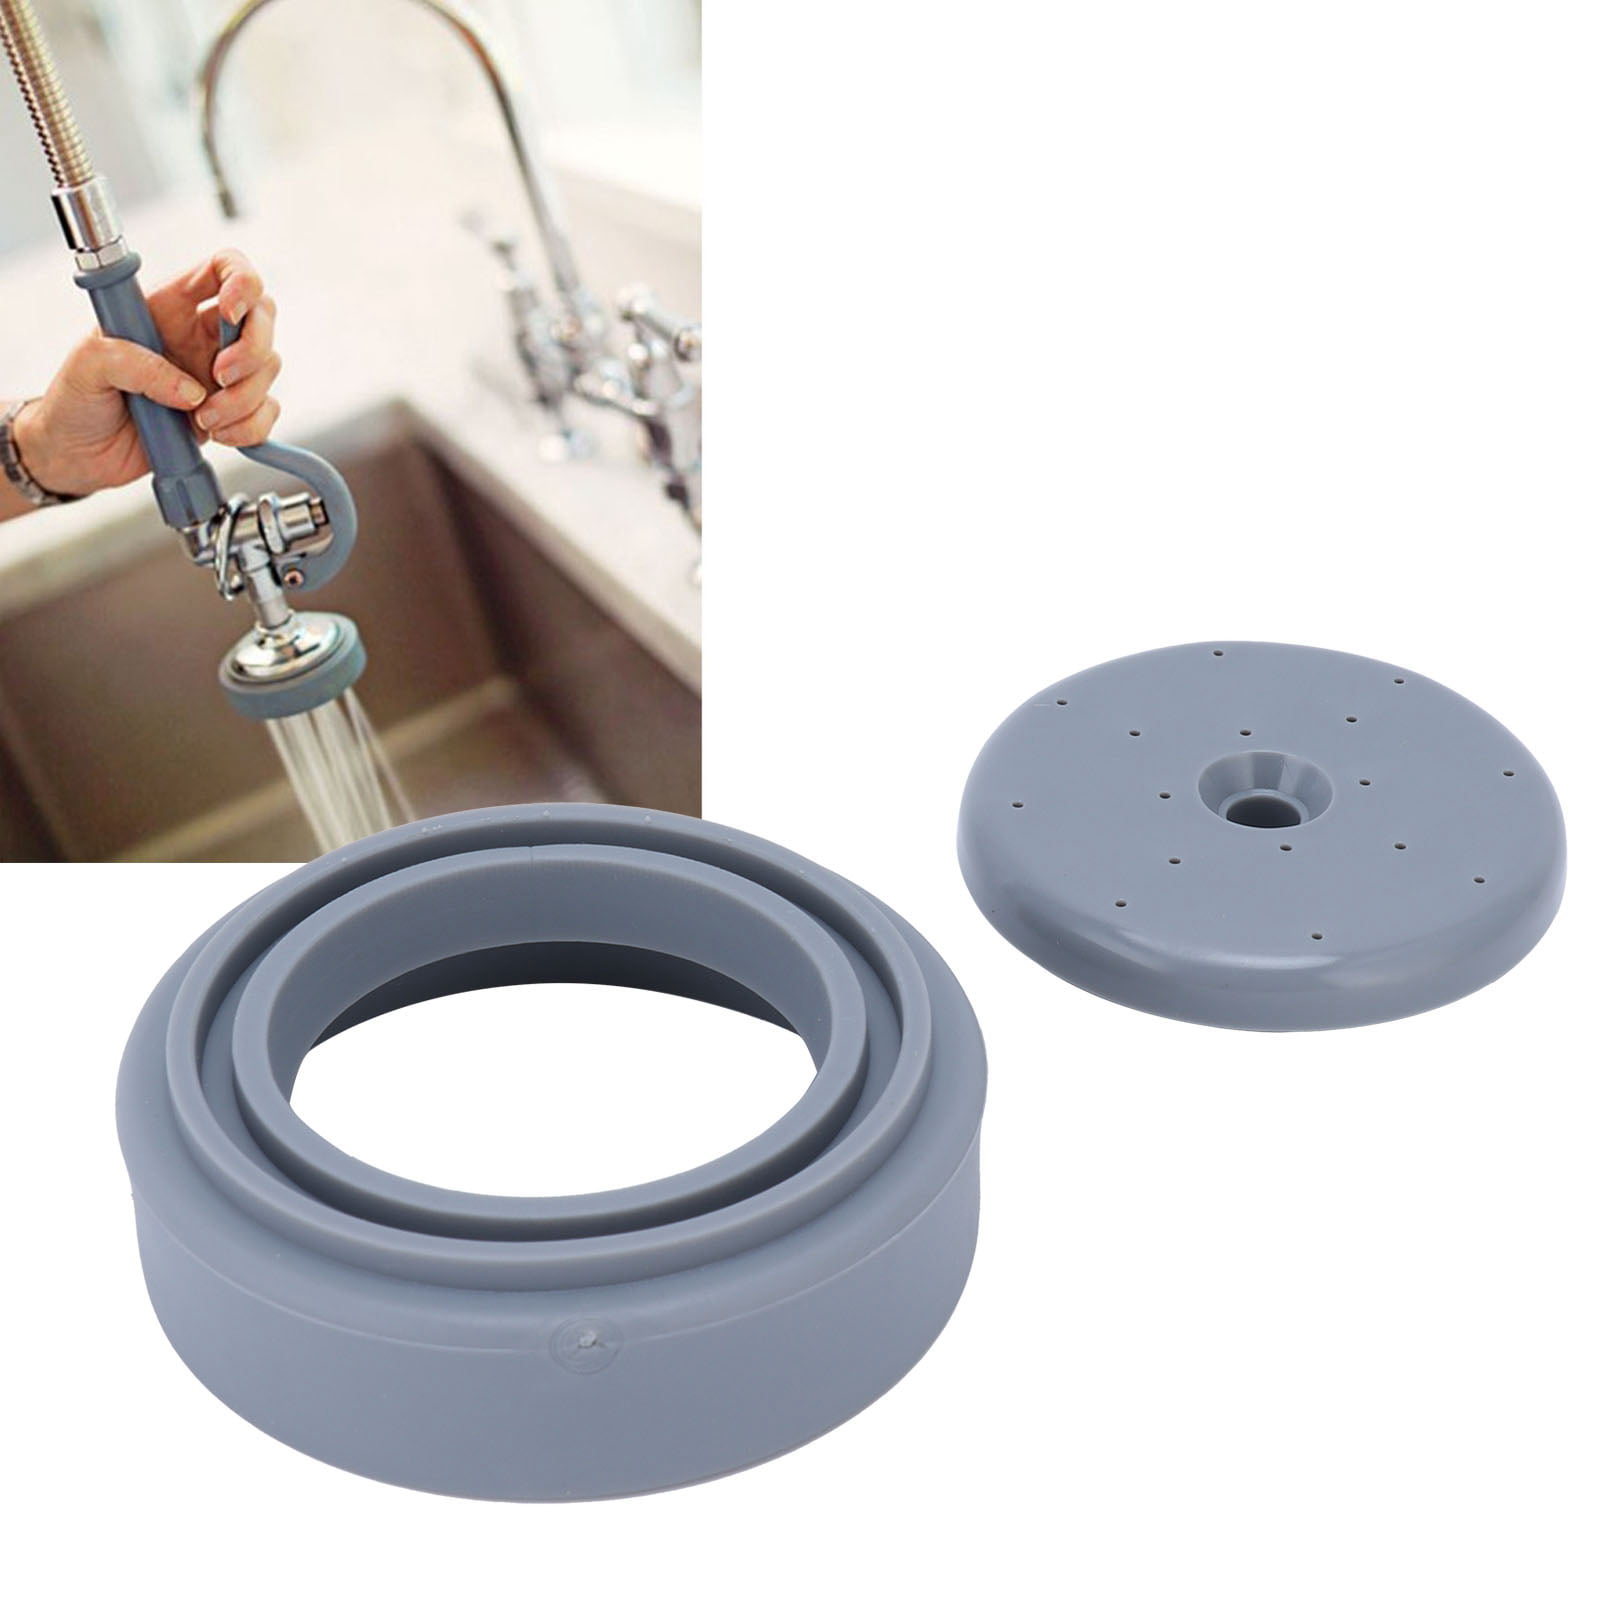 Spray Valve Repair Kit Shower Faucet Cover For Commercial Kitchen Sink Sprayer